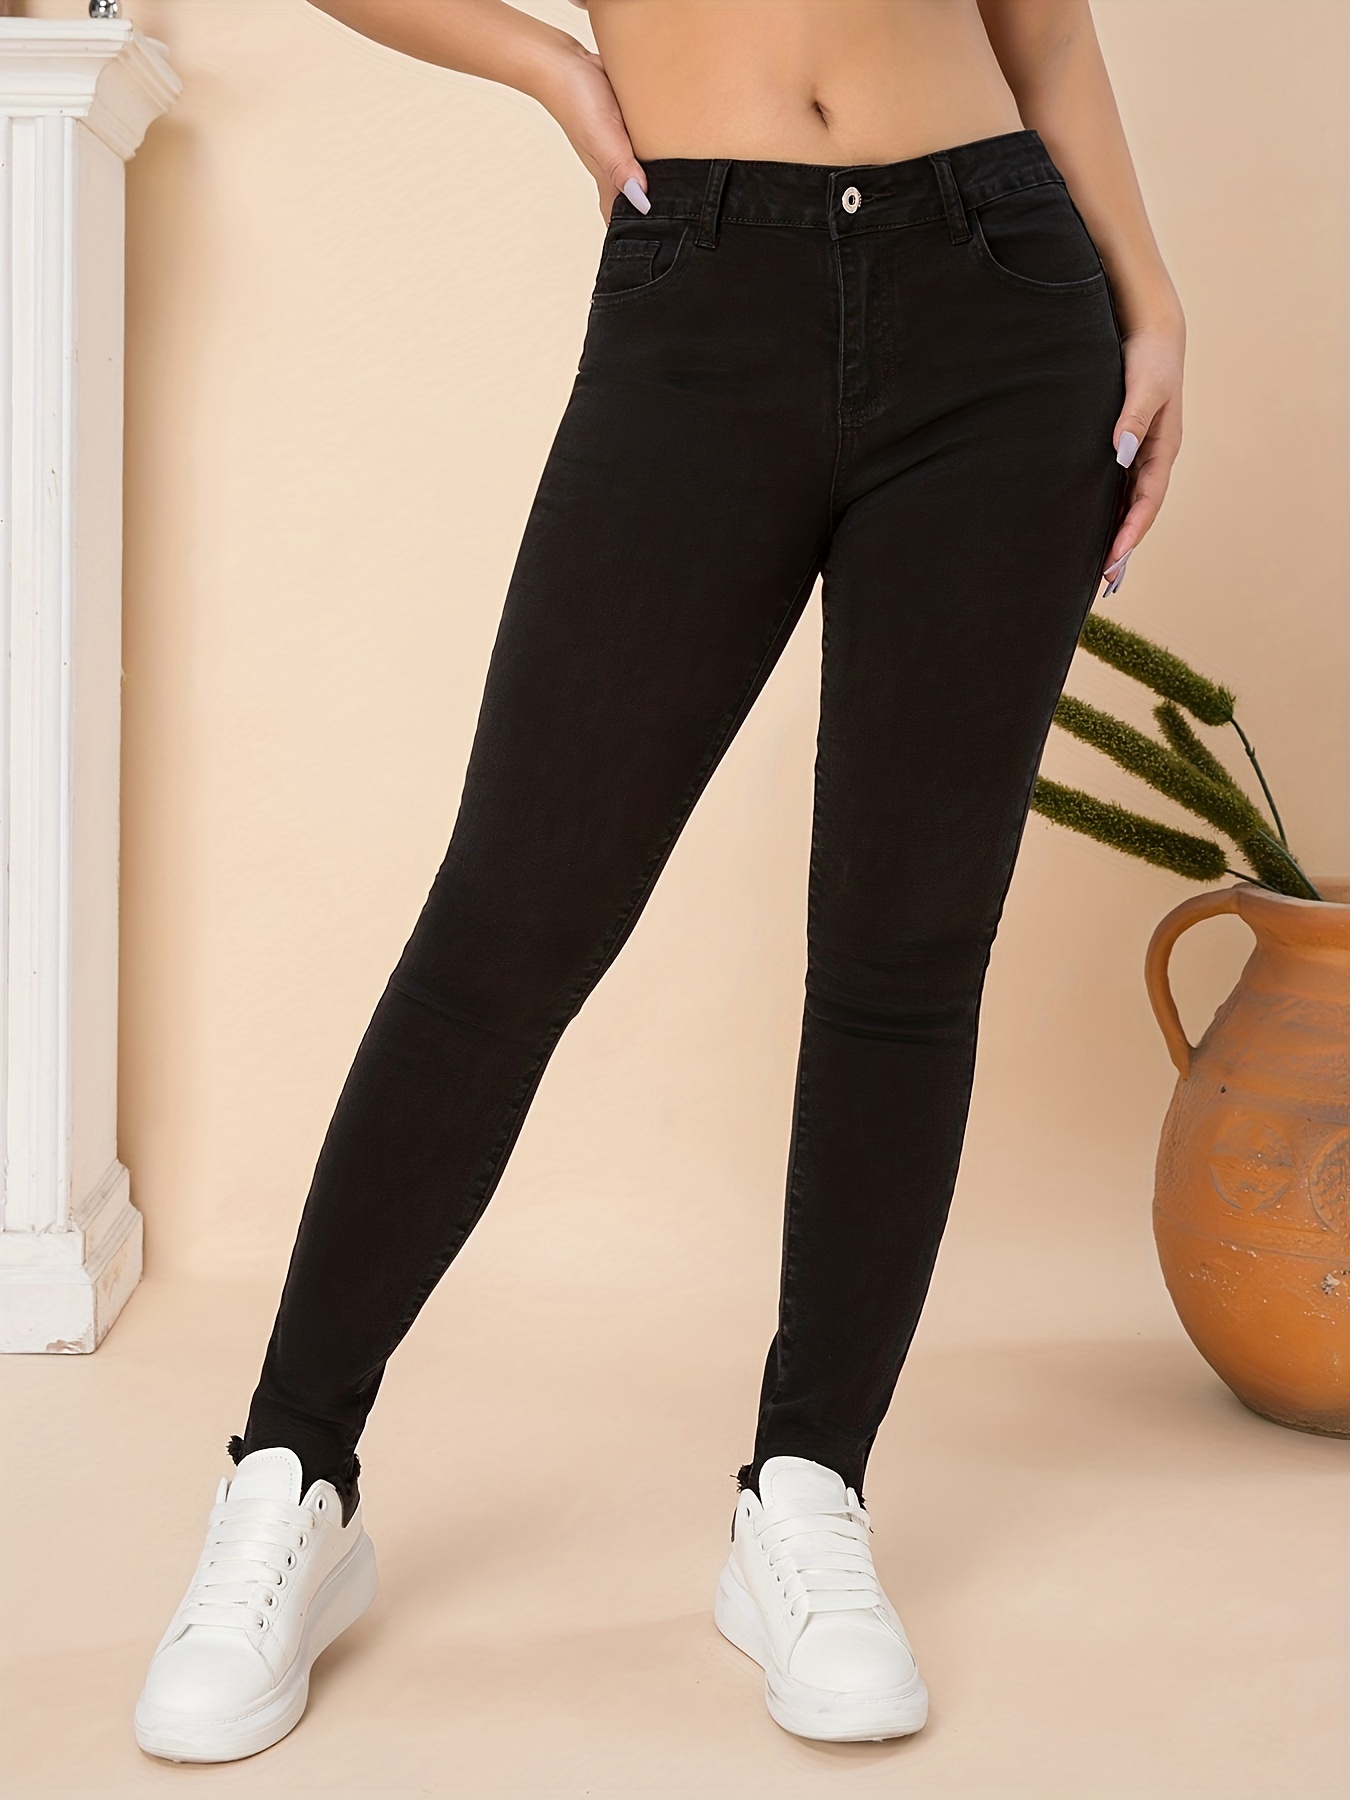 High * * Hem Black Color Skinny Jeans, High Stretchy High Waist Plain  Design Distressed Denim Pants, Women's Denim Jeans, Women's Clothing